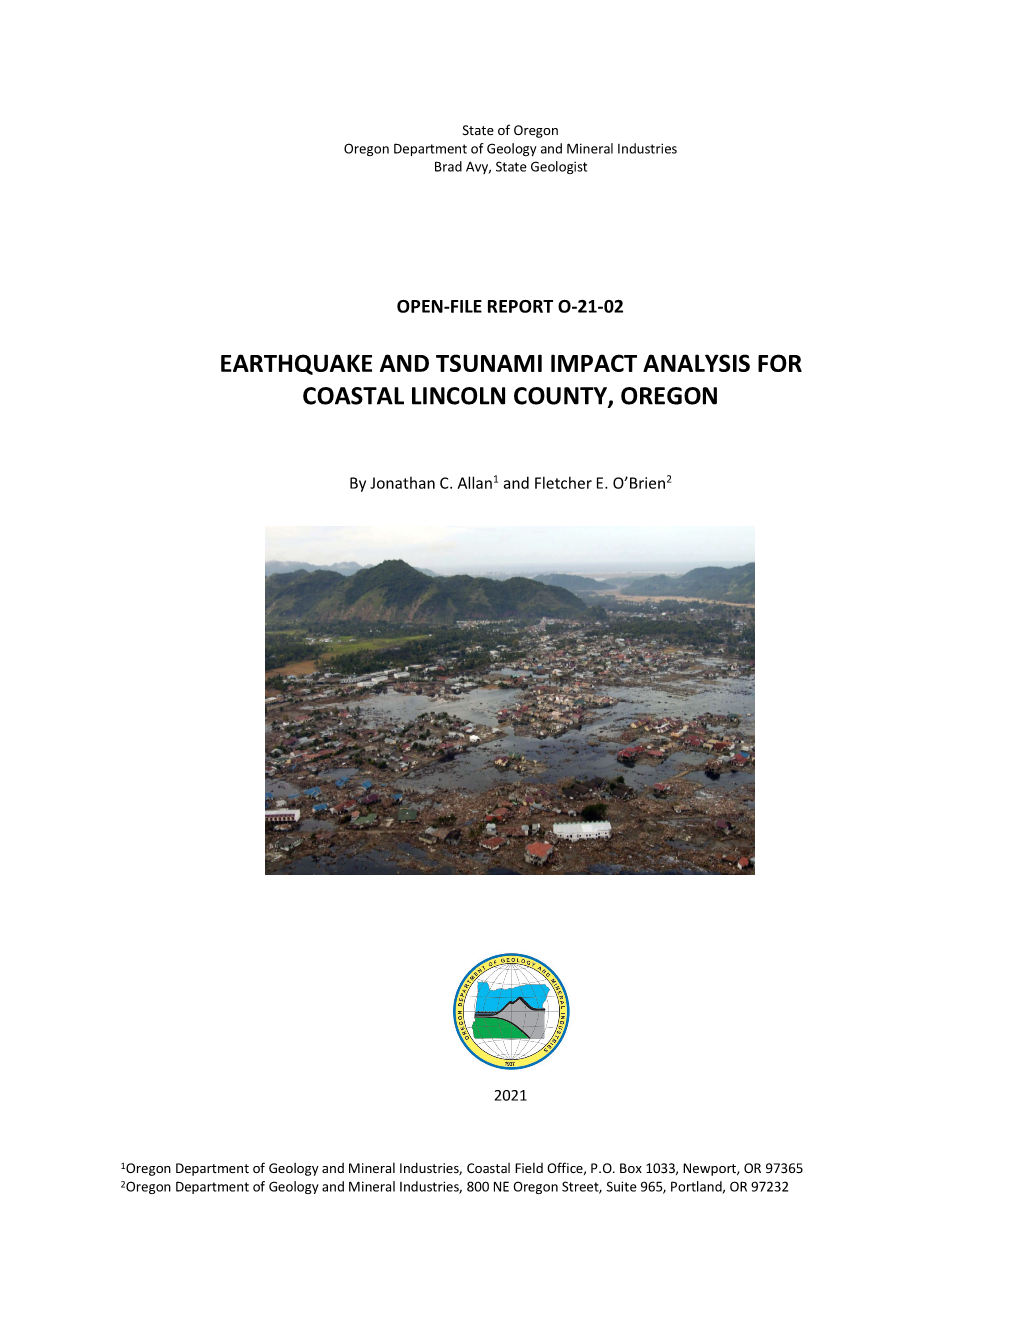 DOGAMI Open-File Report O-21-02, Earthquake and Tsunami Impact Analysis for Coastal Lincoln County, Oregon